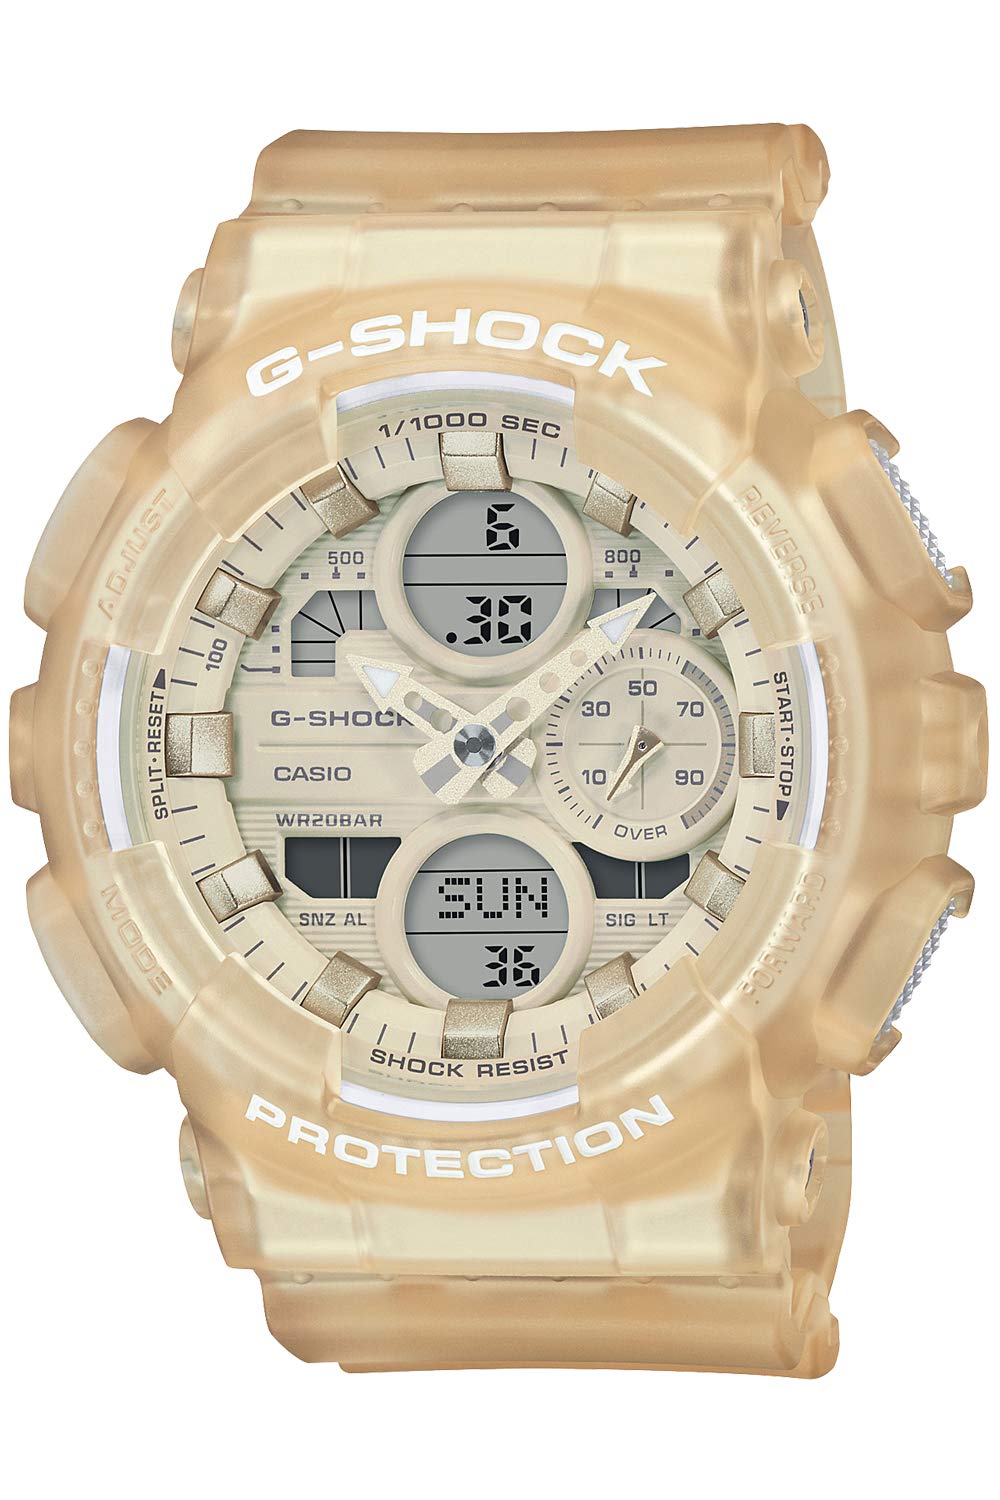 Casio G-Shock Mid Size Women's Watch Domestic Genuine Model Gma-S140Nc